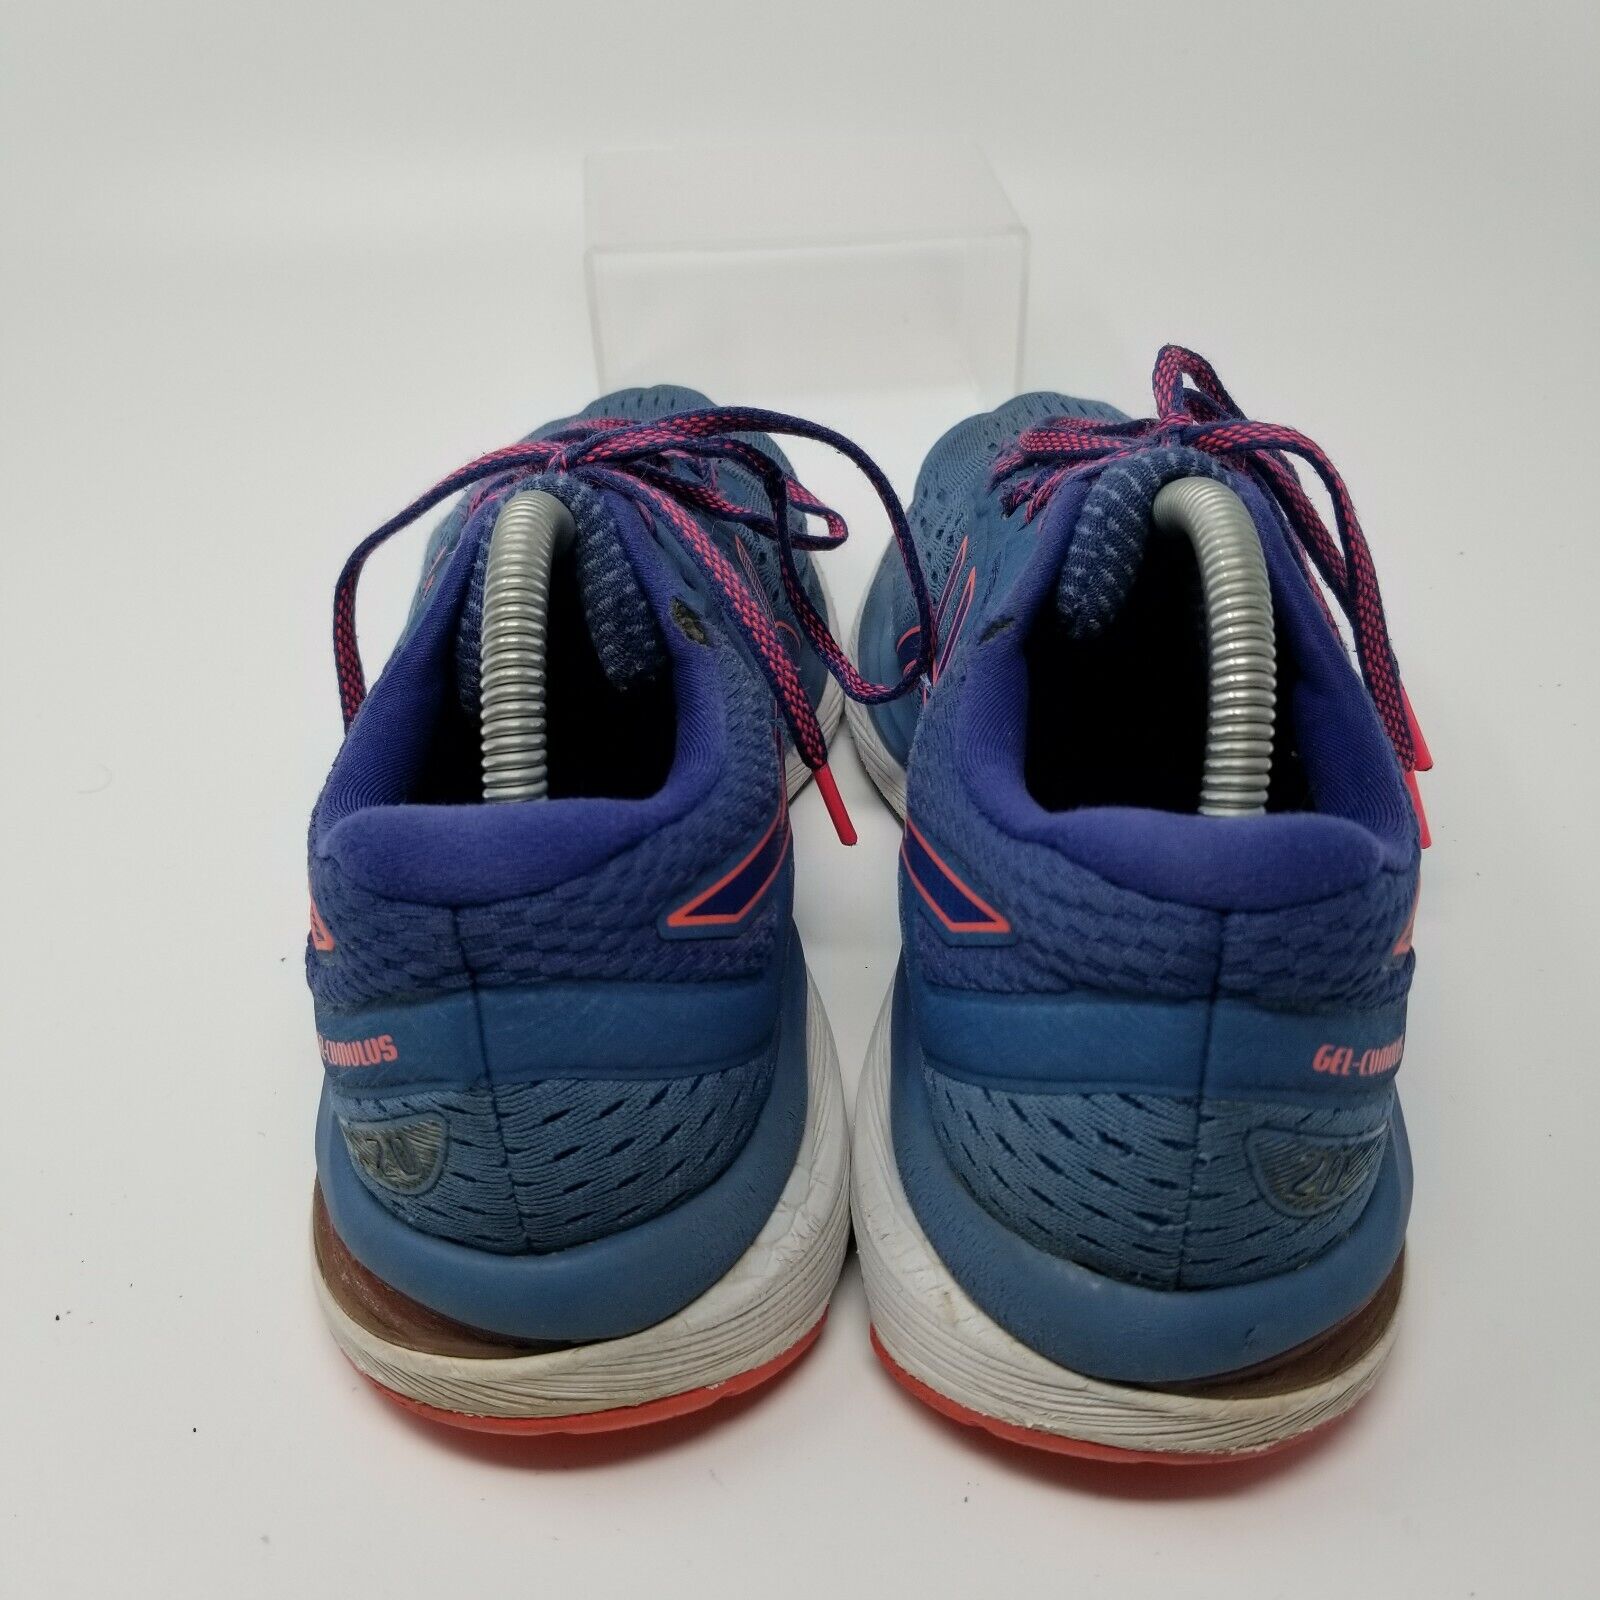 Asics Gel Cumulus 20 Blue Athletic Running Tennis Shoes Sneaker Women Size 10.5